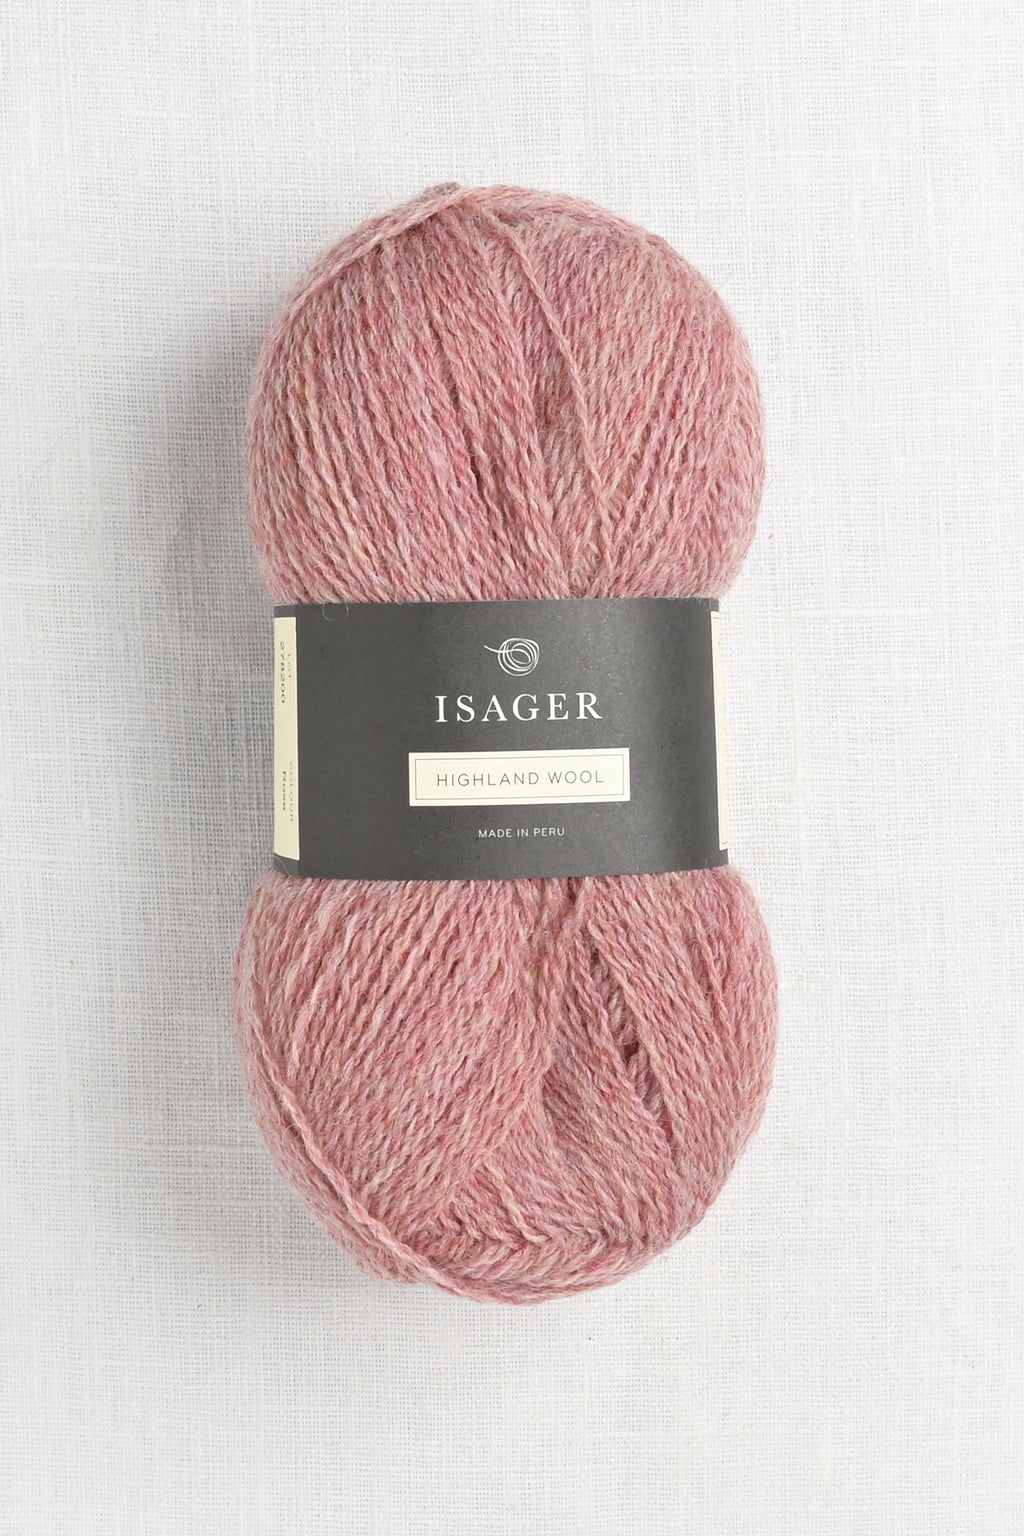 isager highland wool rose